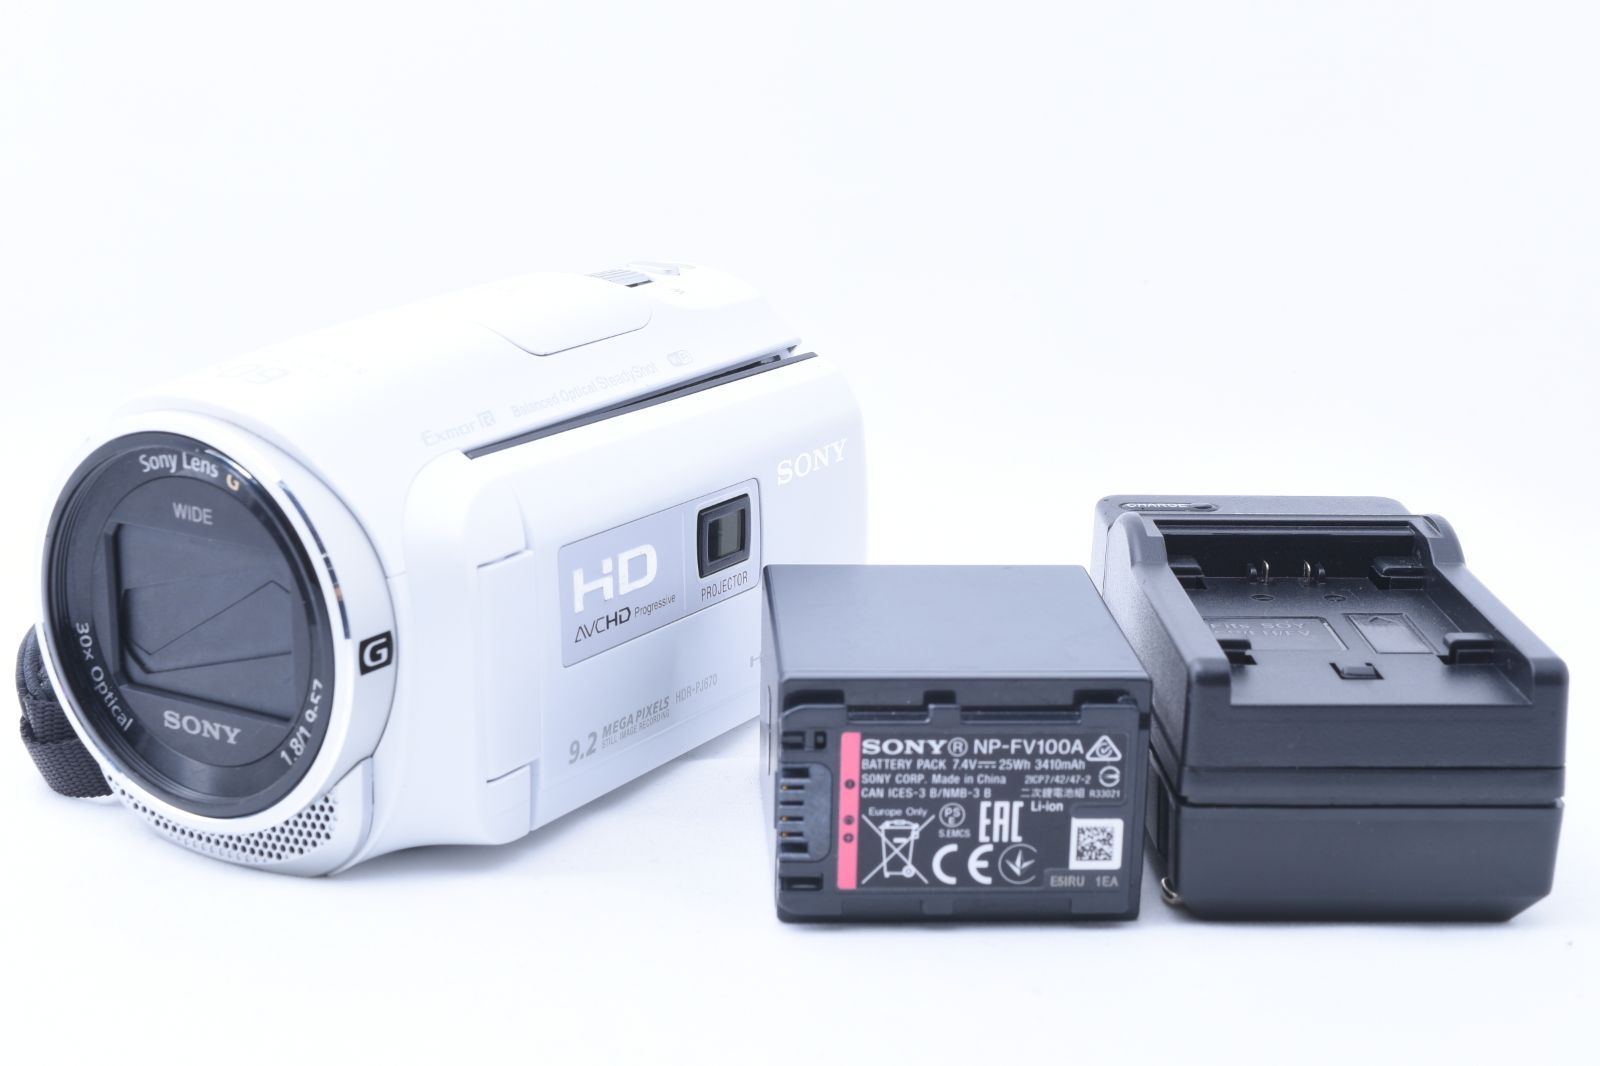 SONY HDビデオカメラ Handycam HDR-PJ670 ボルドーブラウン 光学30倍 HDR-PJ670-T qqffhab